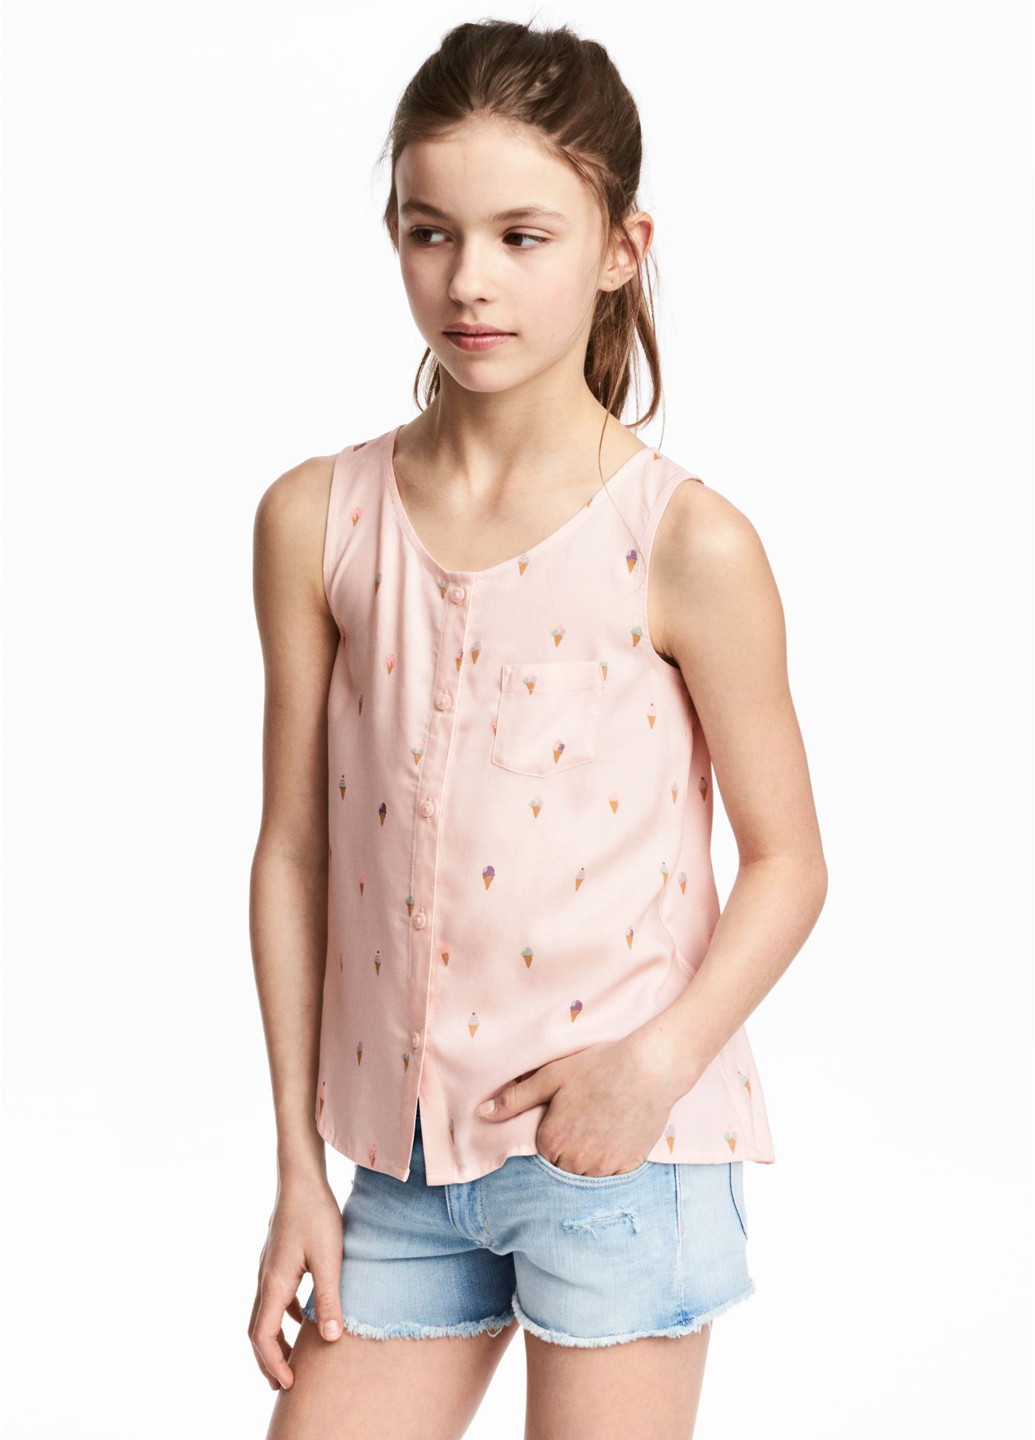 Светло-розовая с орнаментом блузка H&M летняя